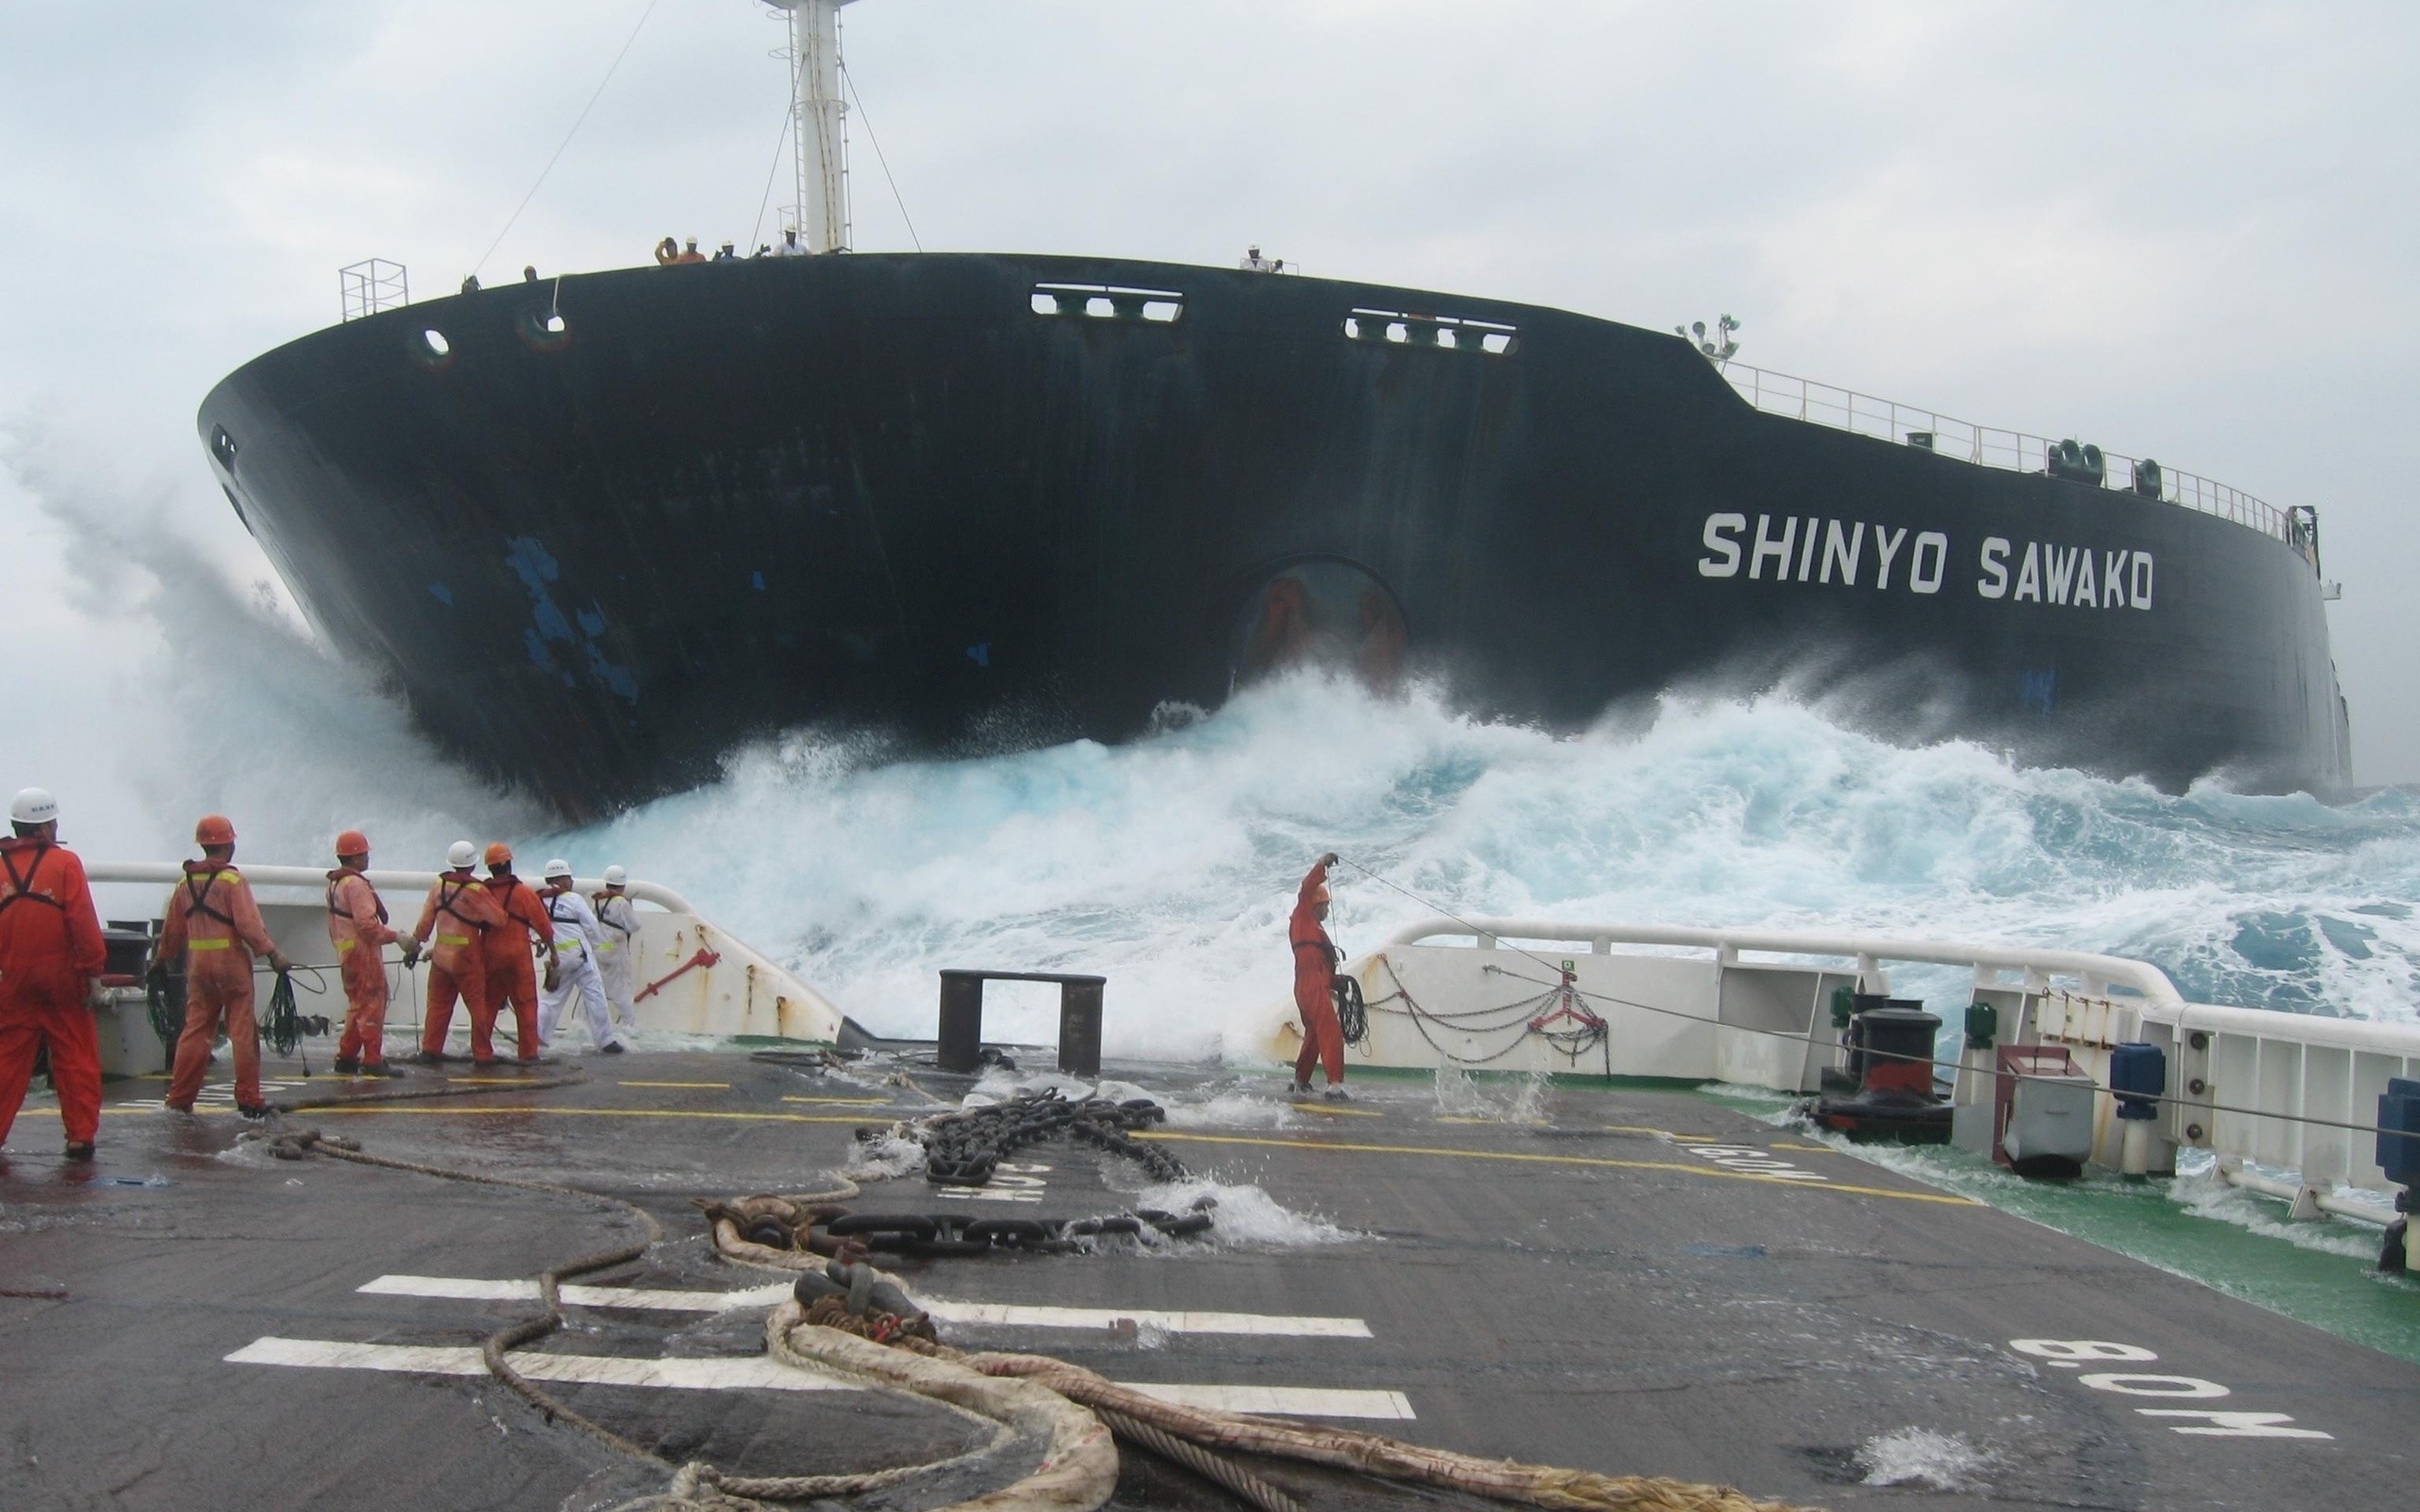 A tugboat approaches Hong Kong freighter, the Shinyo Sawako